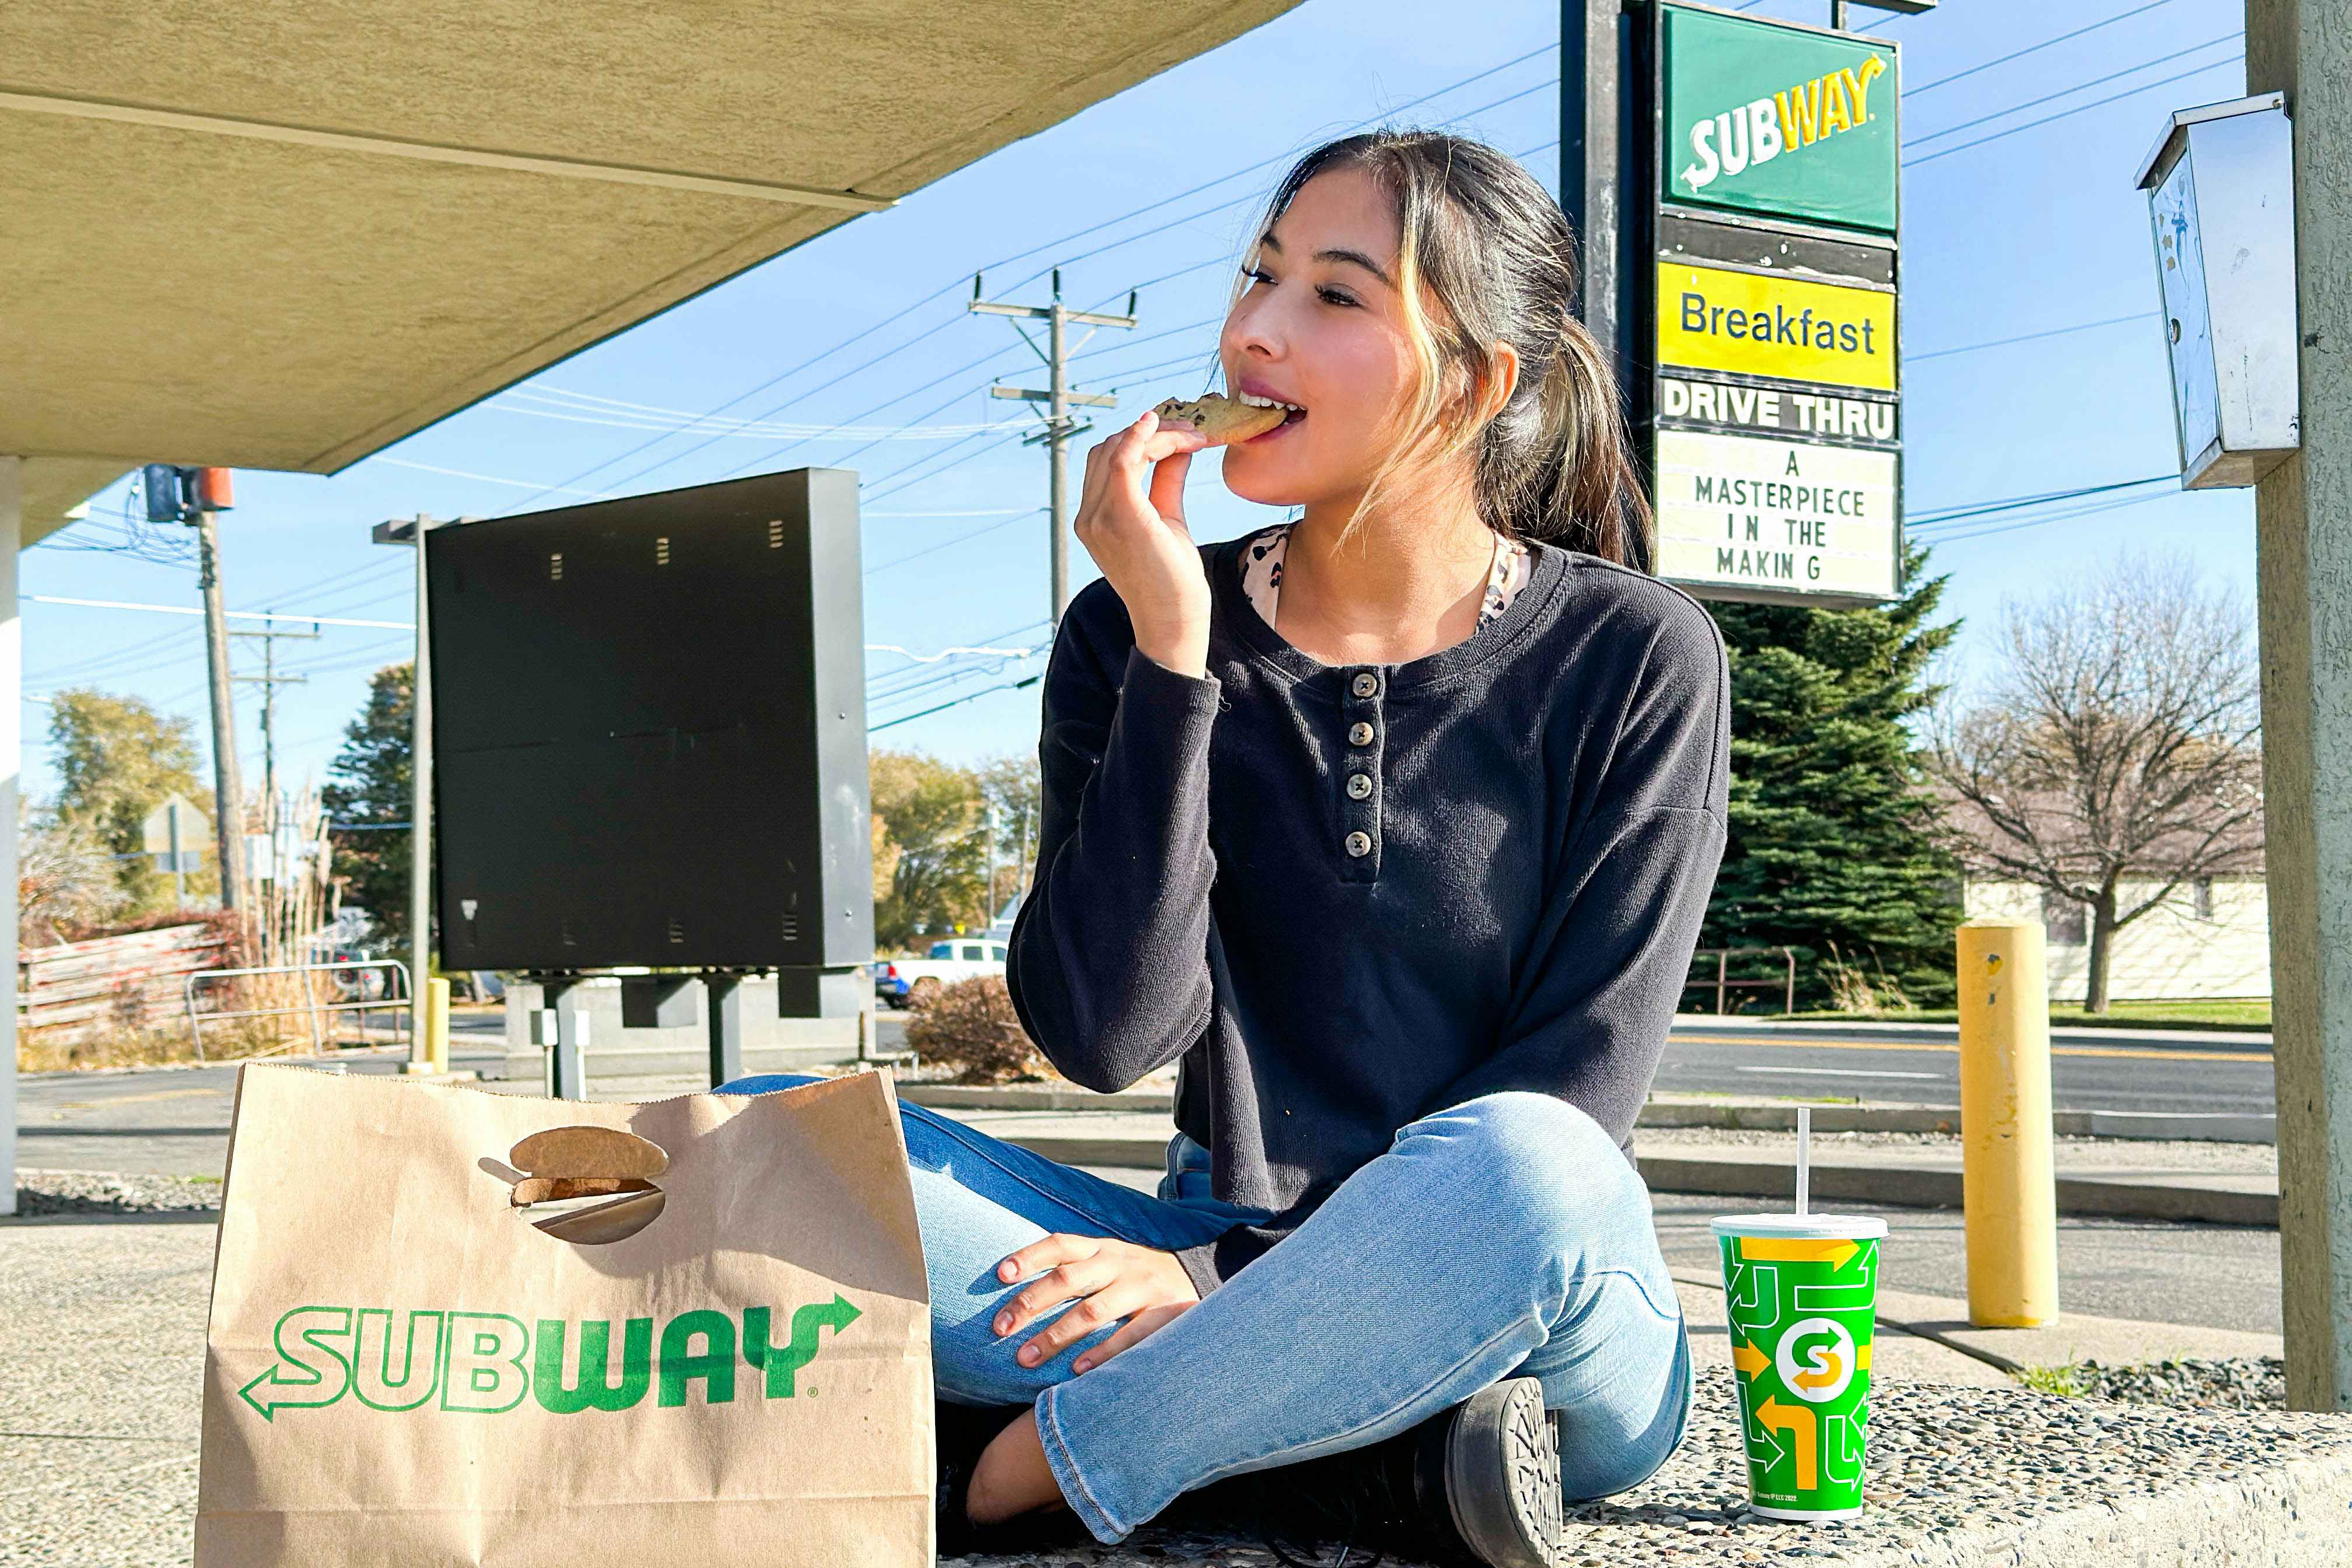 a woman eating a coffee outside subway